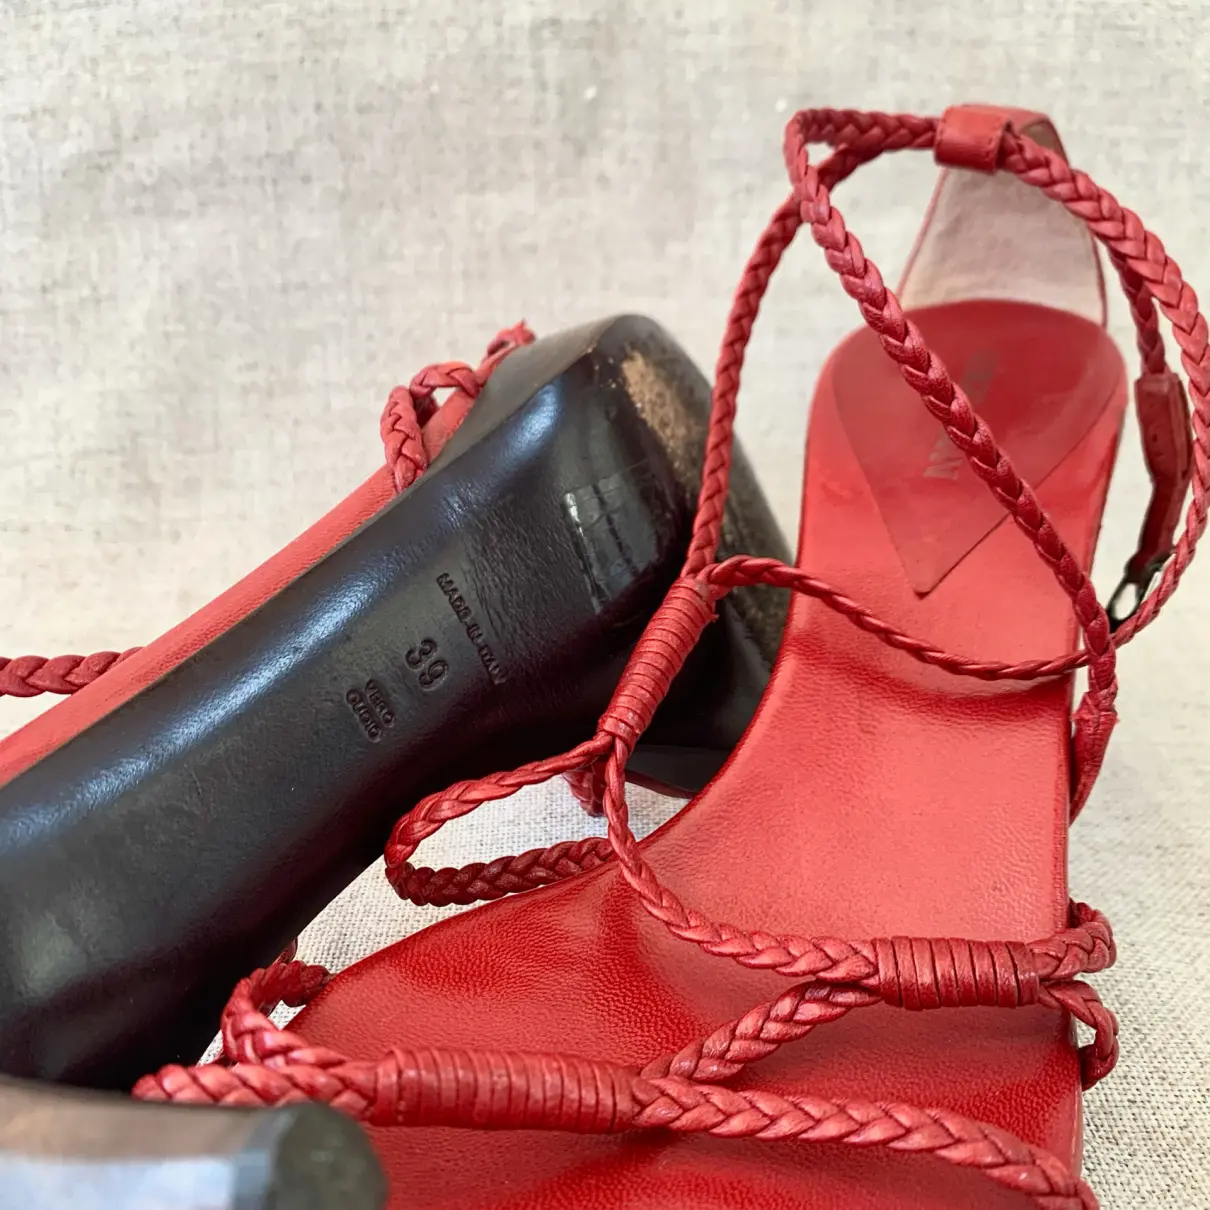 Luxury Giorgio Armani Sandals Women